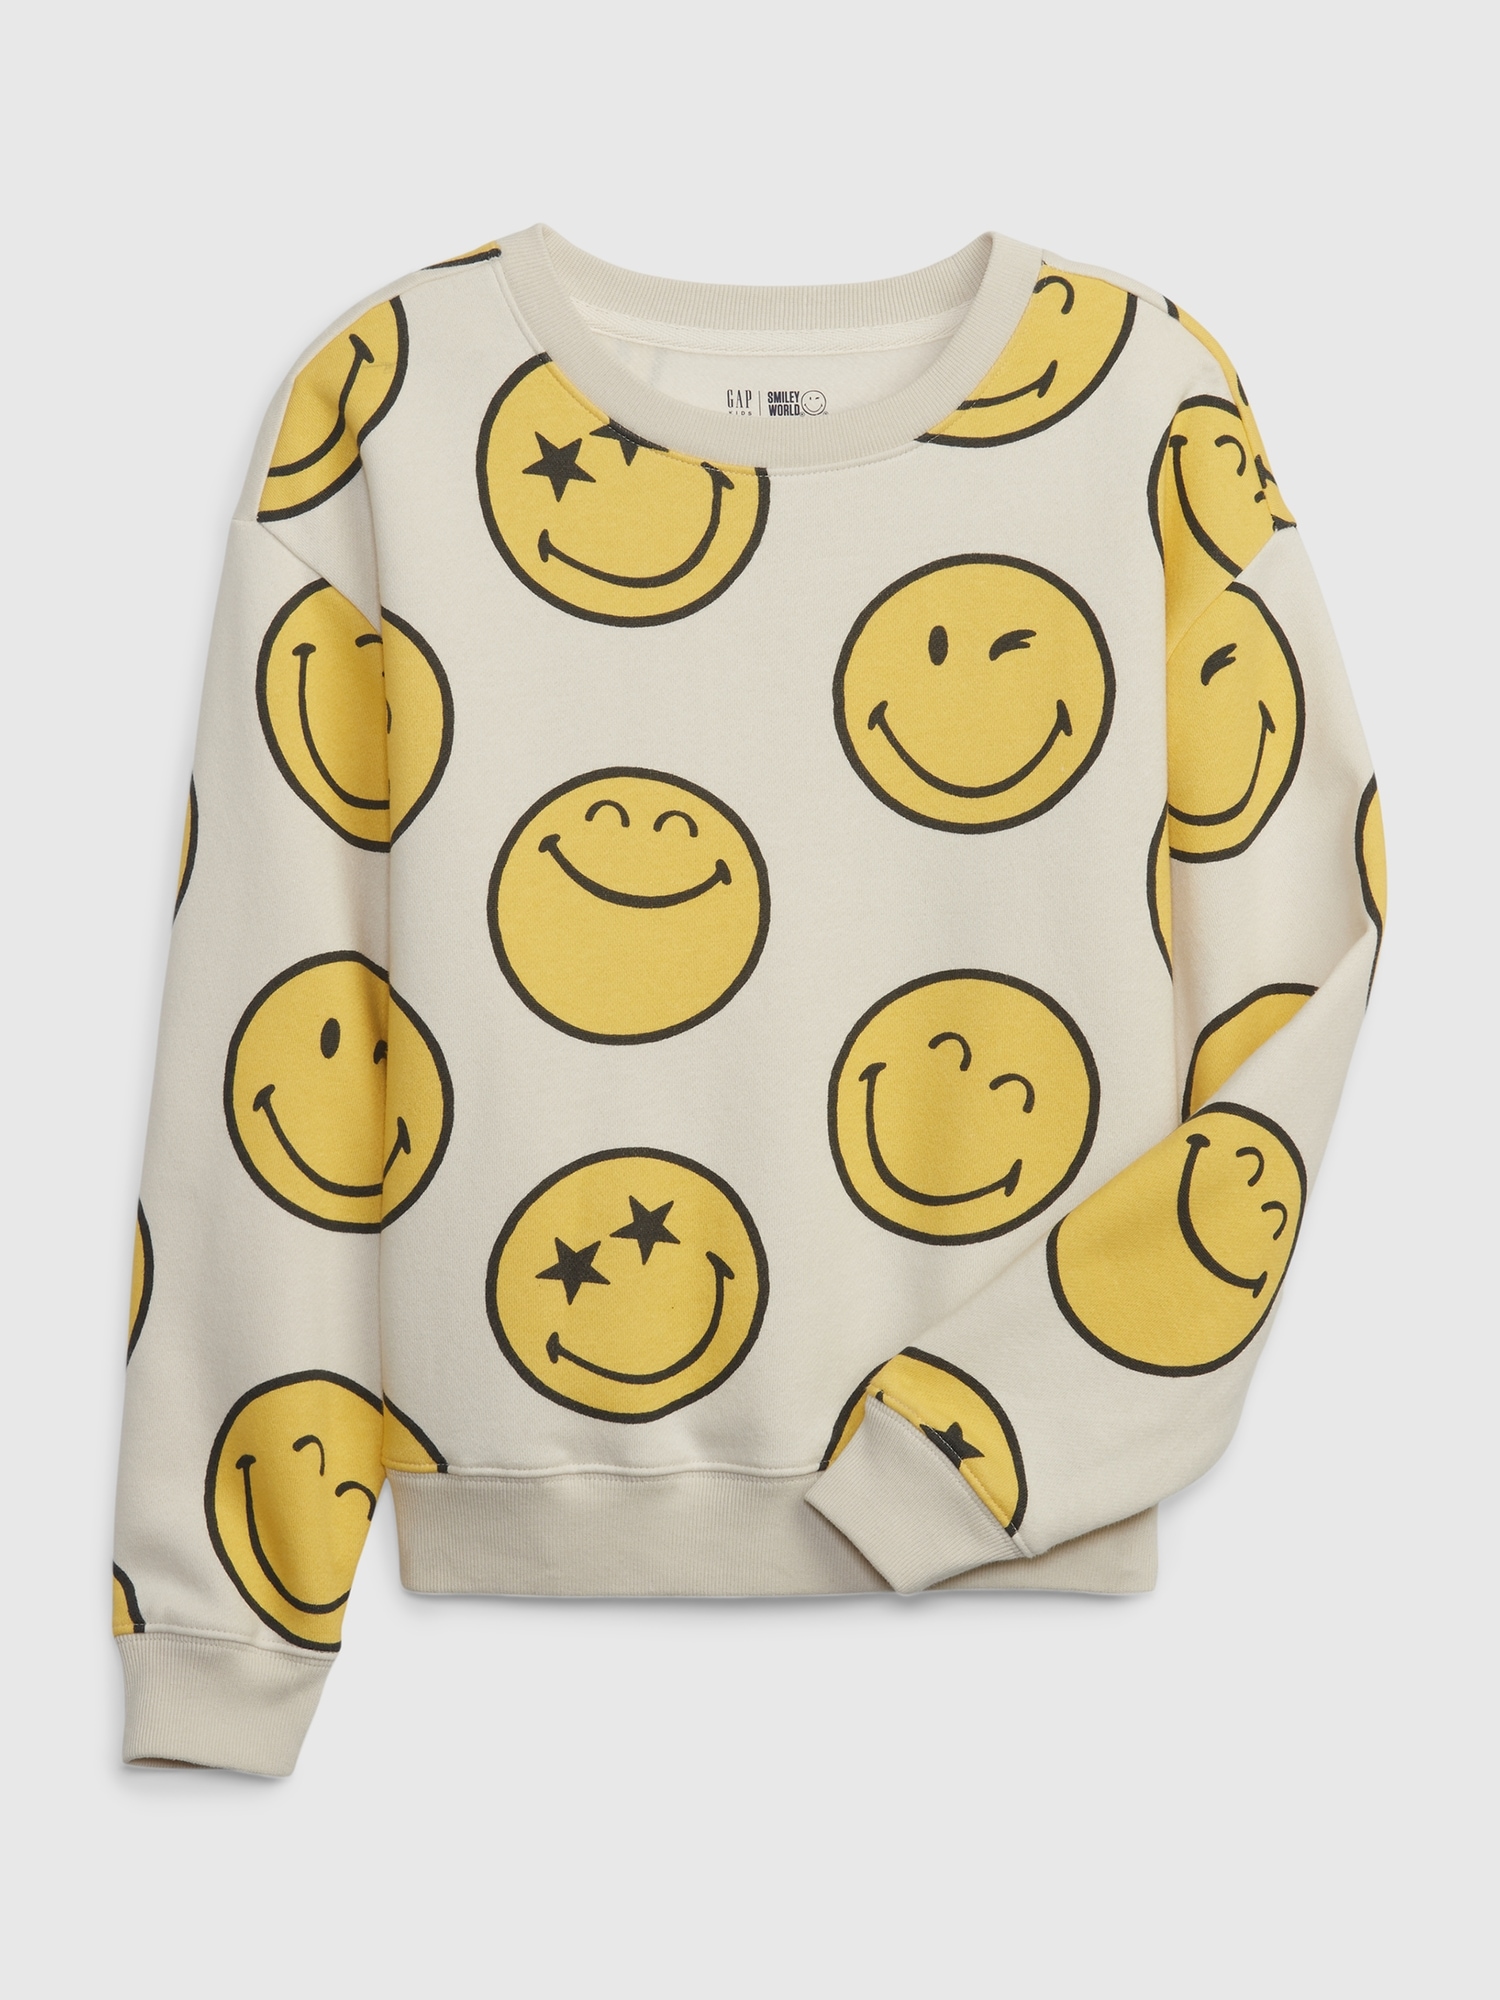 Gap × SmileyWorld® Kids Graphic Sweatshirt | Gap